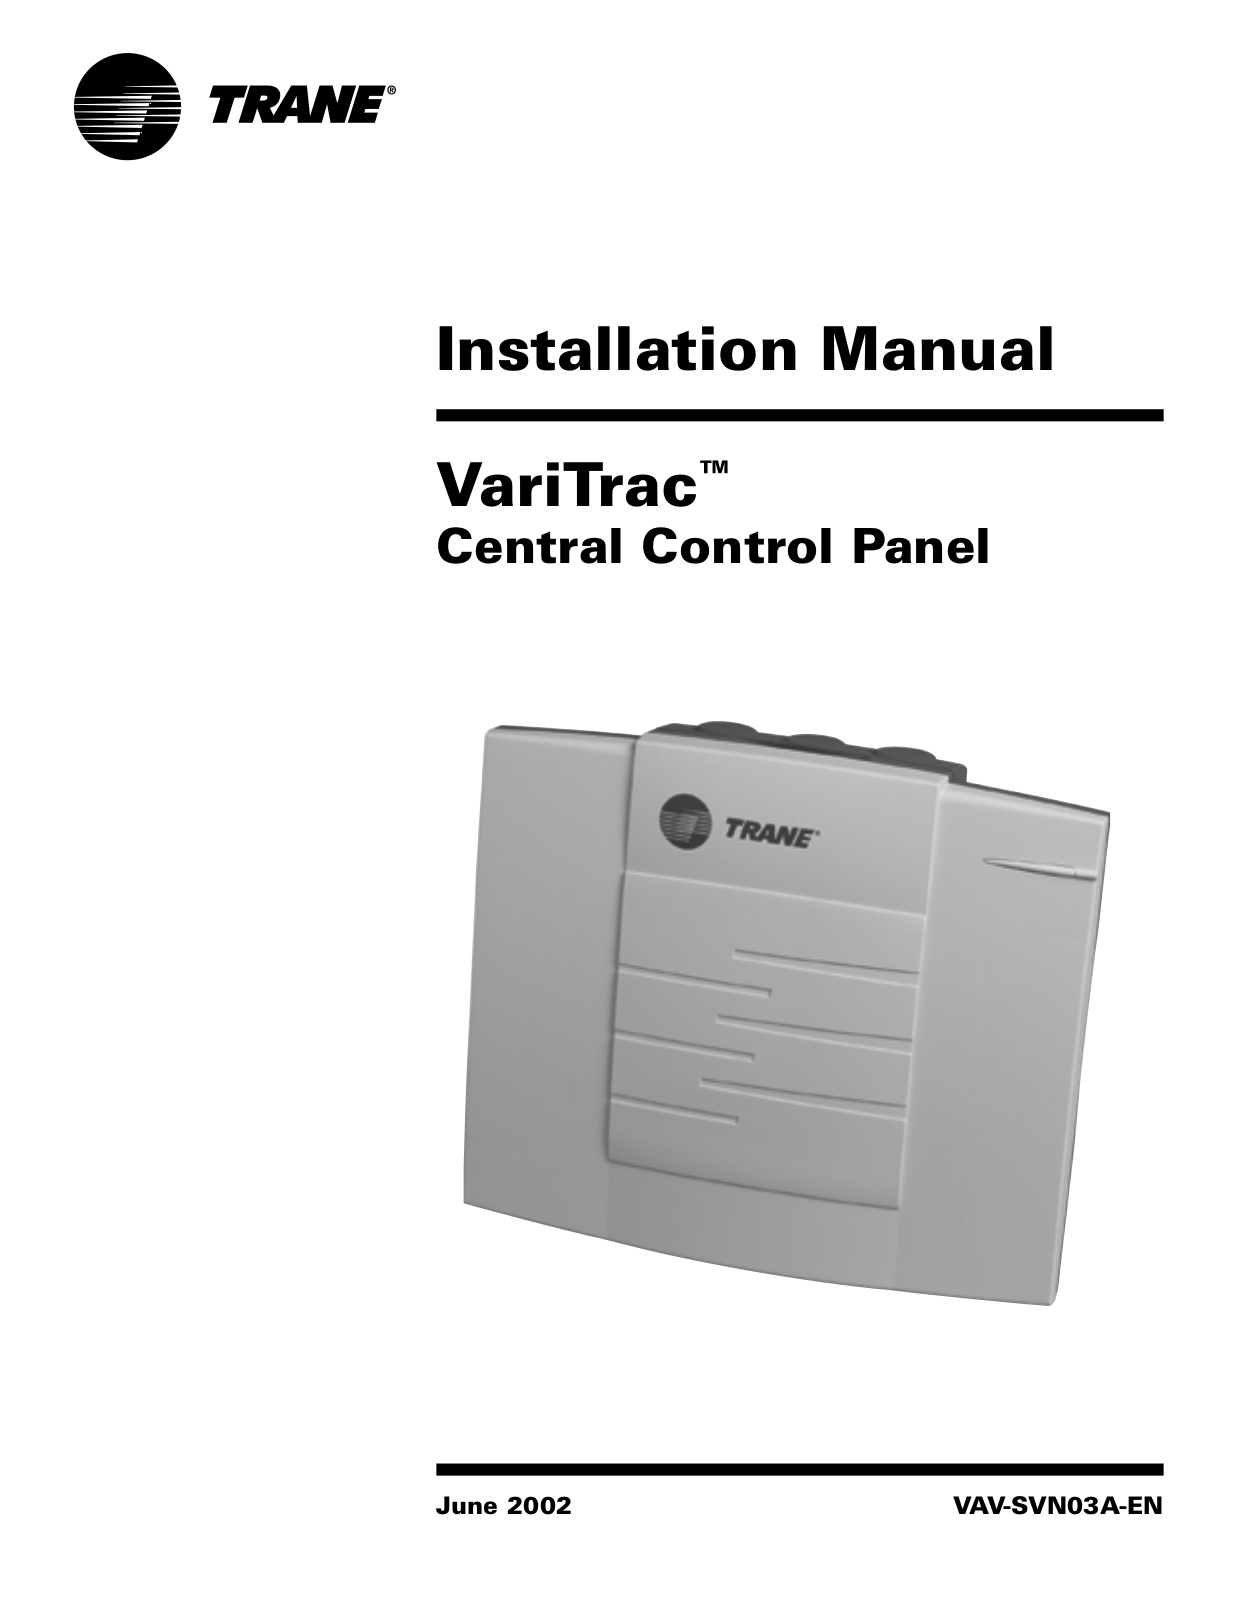 Trane VariTrac Installation and Maintenance Manual